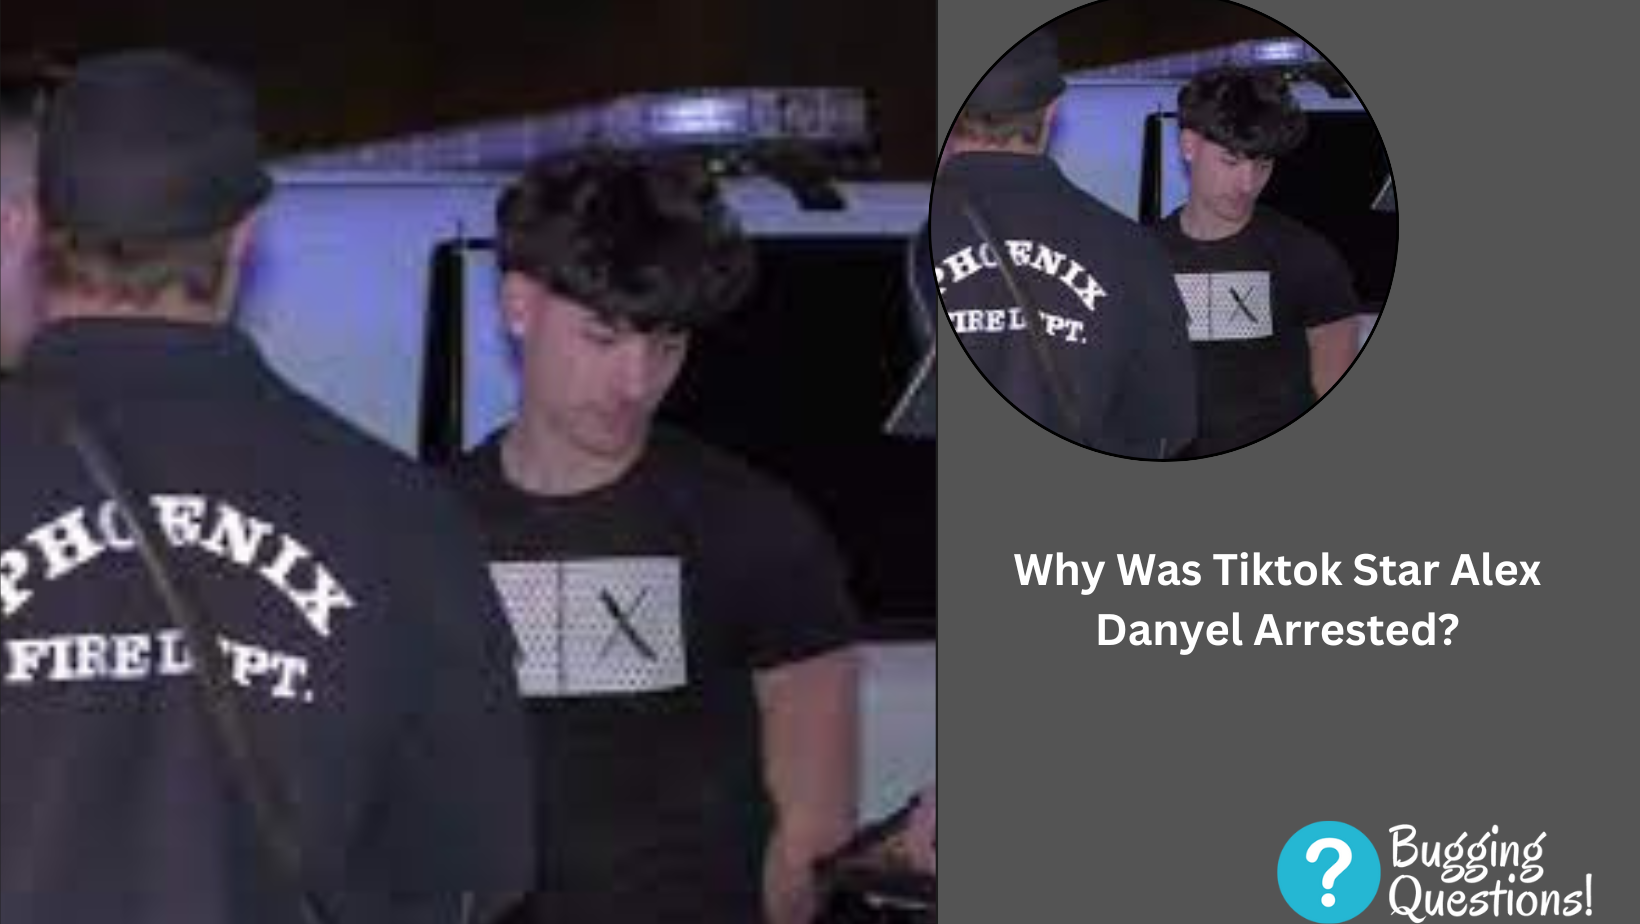 Why Was Tiktok Star Alex Danyel Arrested?